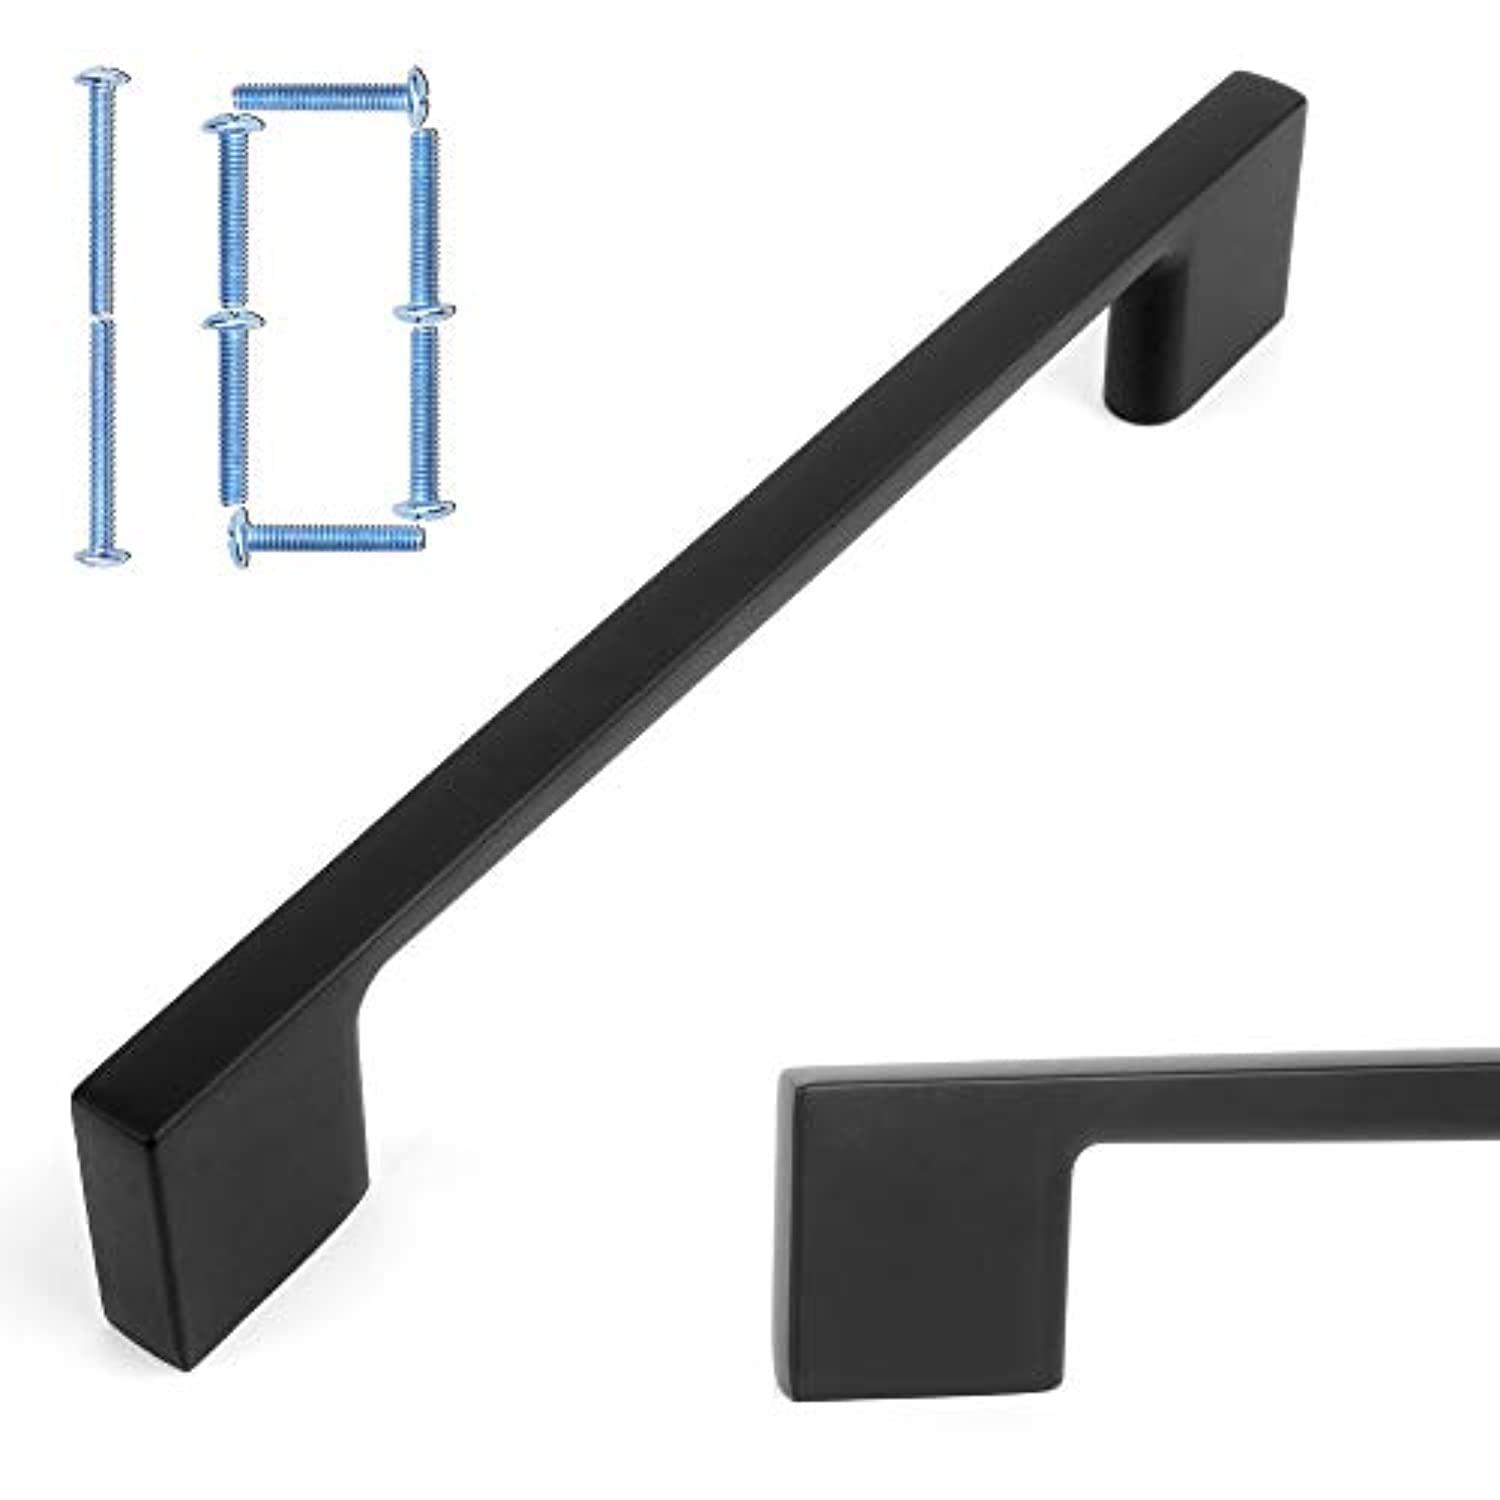 koofizo wide foot cabinet bar pull - black modern solid handle, 5 inch/128mm screw spacing, 10-pack for kitchen cupboard door